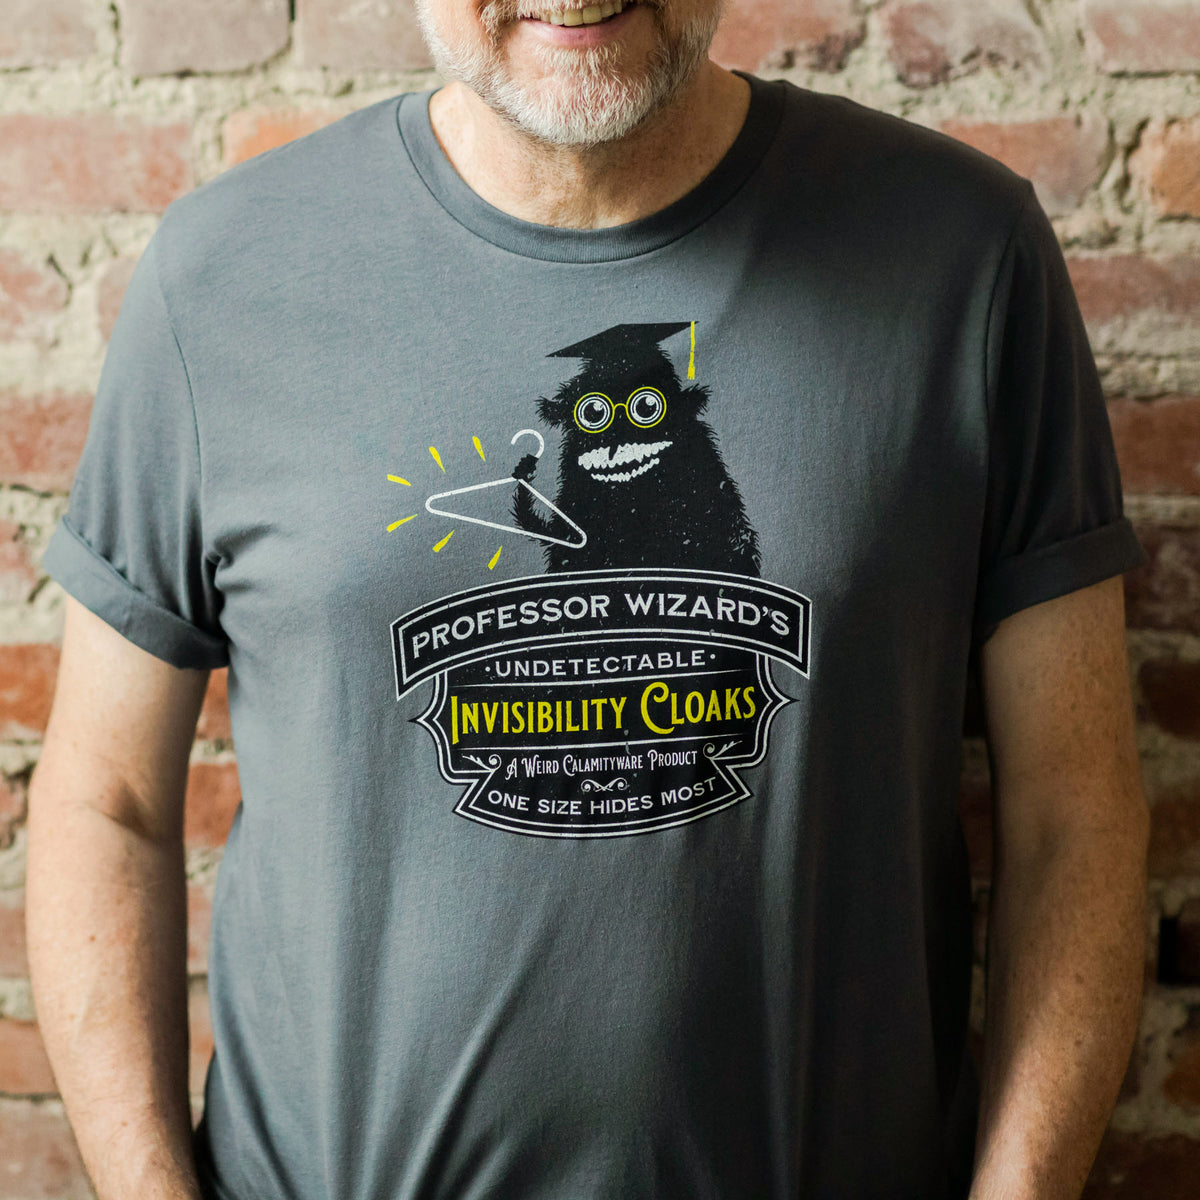 Professor Wizard Unisex T-Shirt